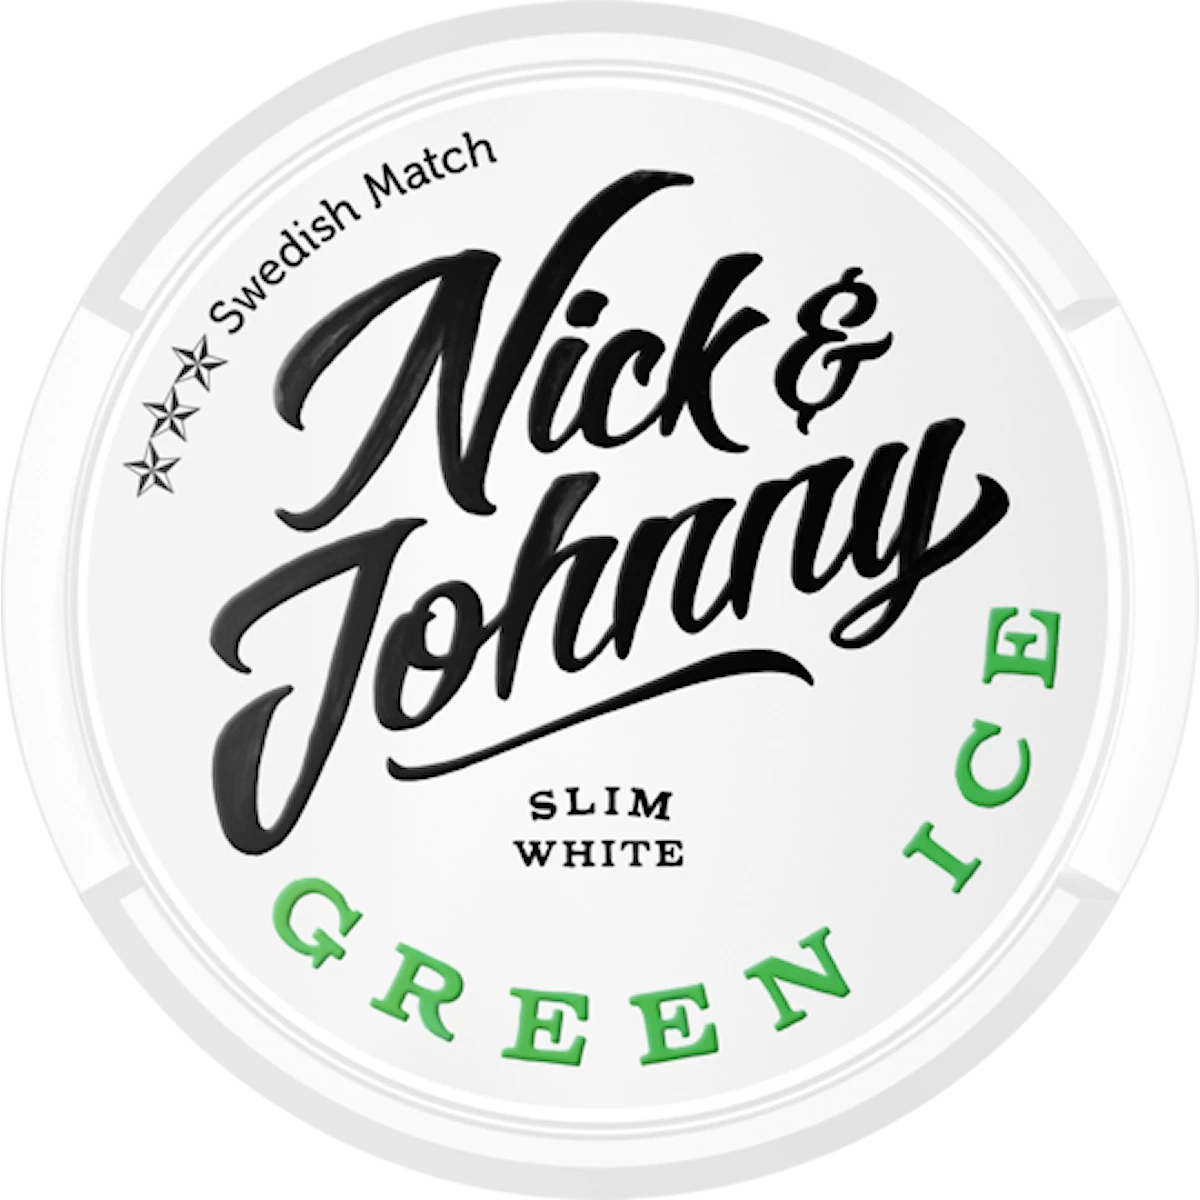 Nick & Johnny Green Ice White Slim